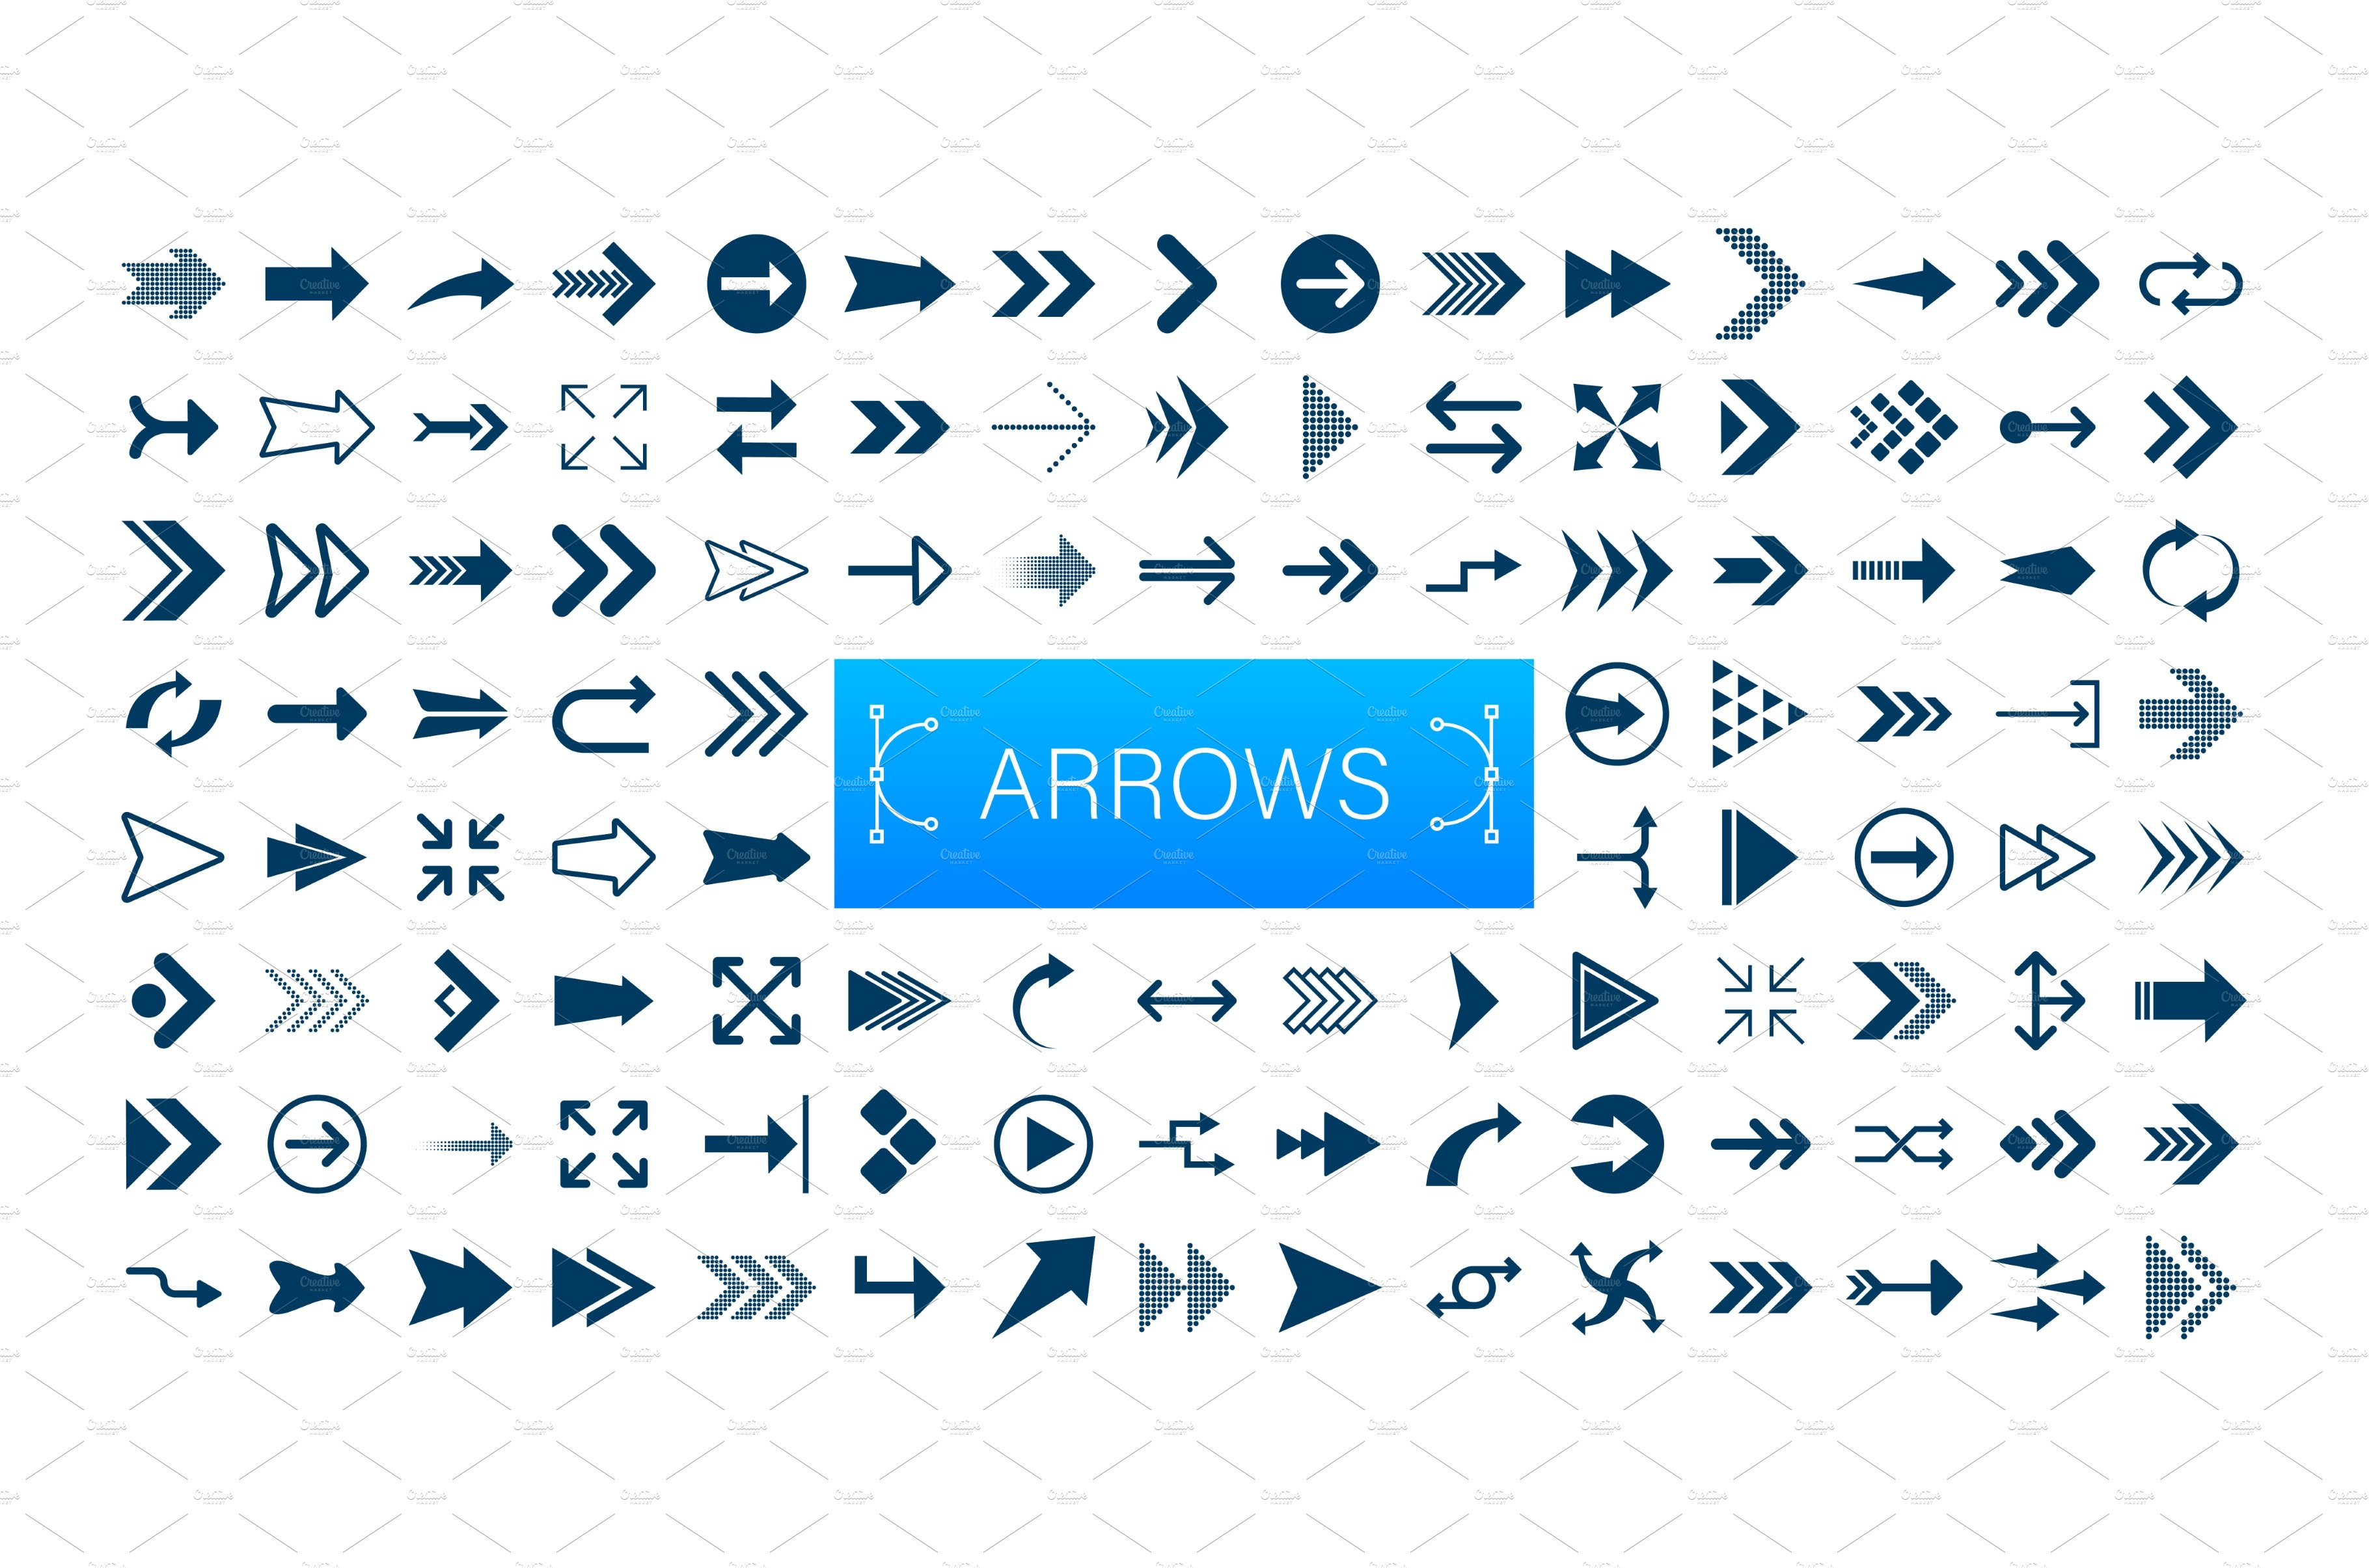 Arrows big black set icons. Arrow cover image.